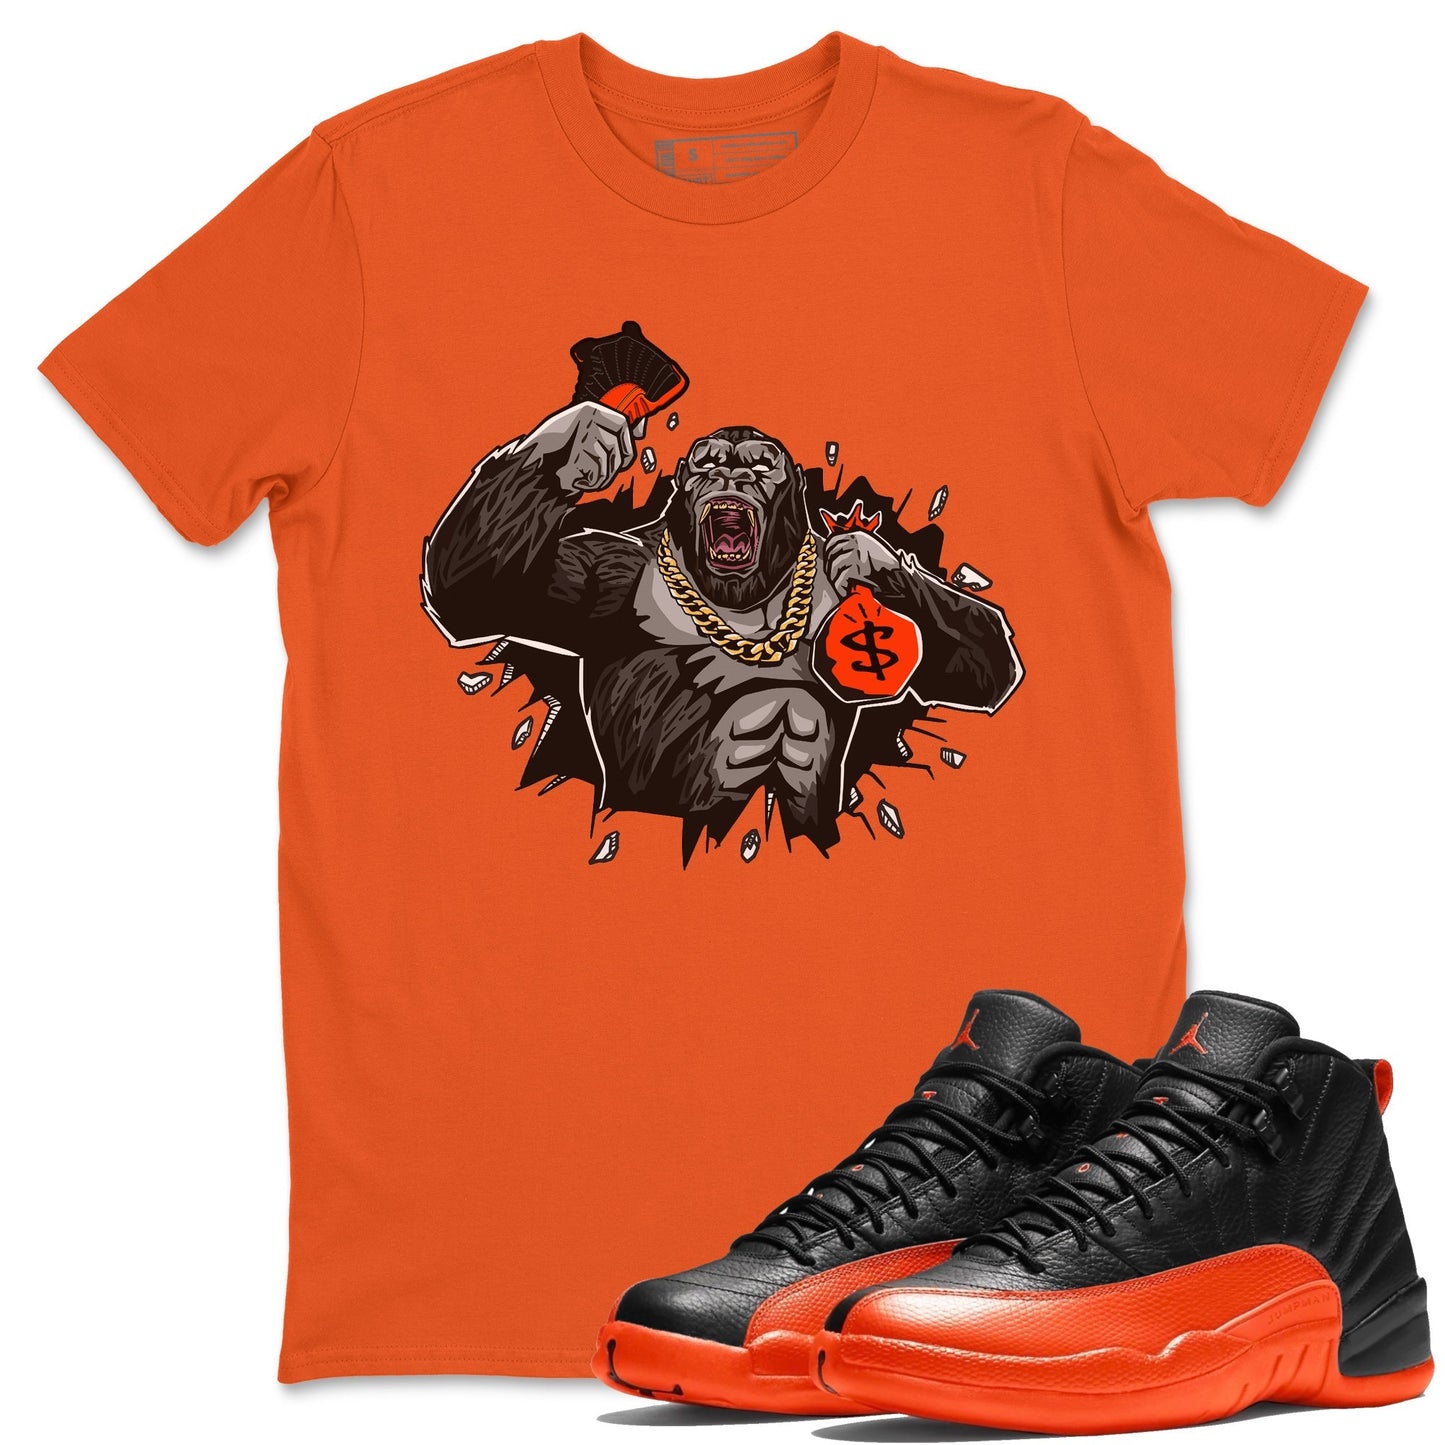 Air Jordan 12 Brilliant Orange Sneaker Match Tees Hustle Gorilla Sneaker Tees AJ12 Brilliant Orange Sneaker Release Tees Unisex Shirts Orange 1